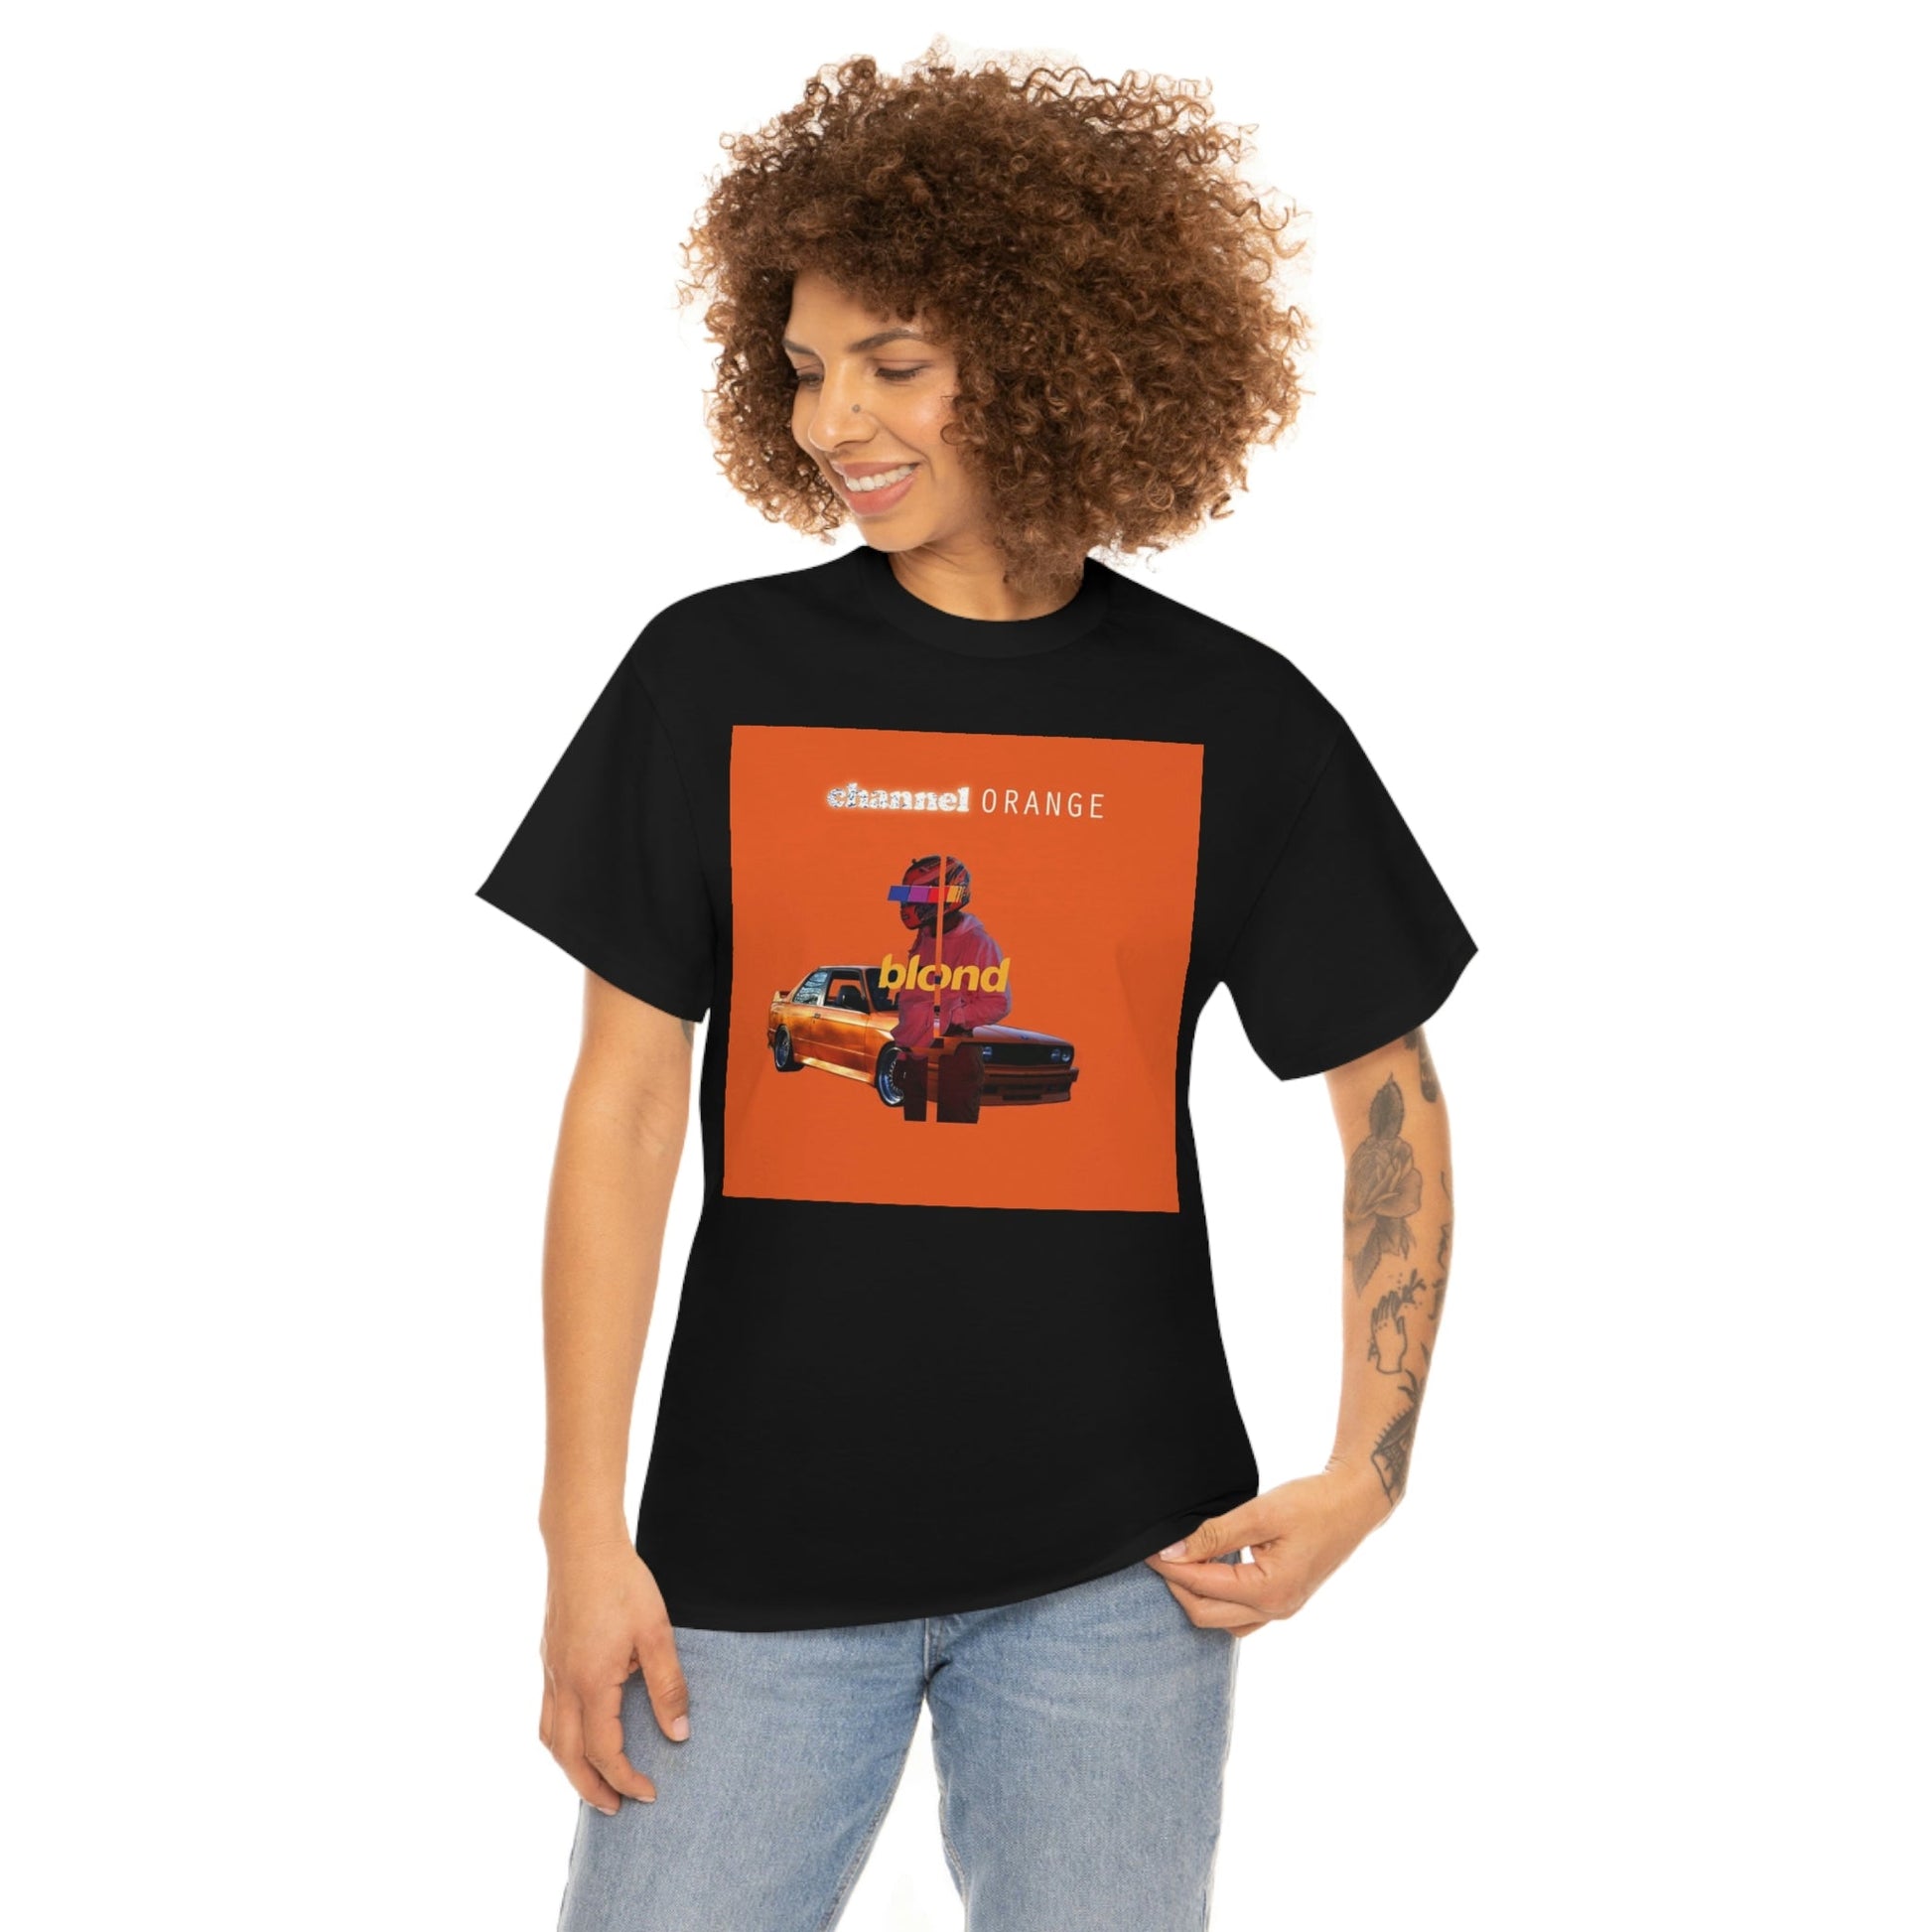 Frank Ocean Channel Orange Blond T-Shirt - RetroTeeShop